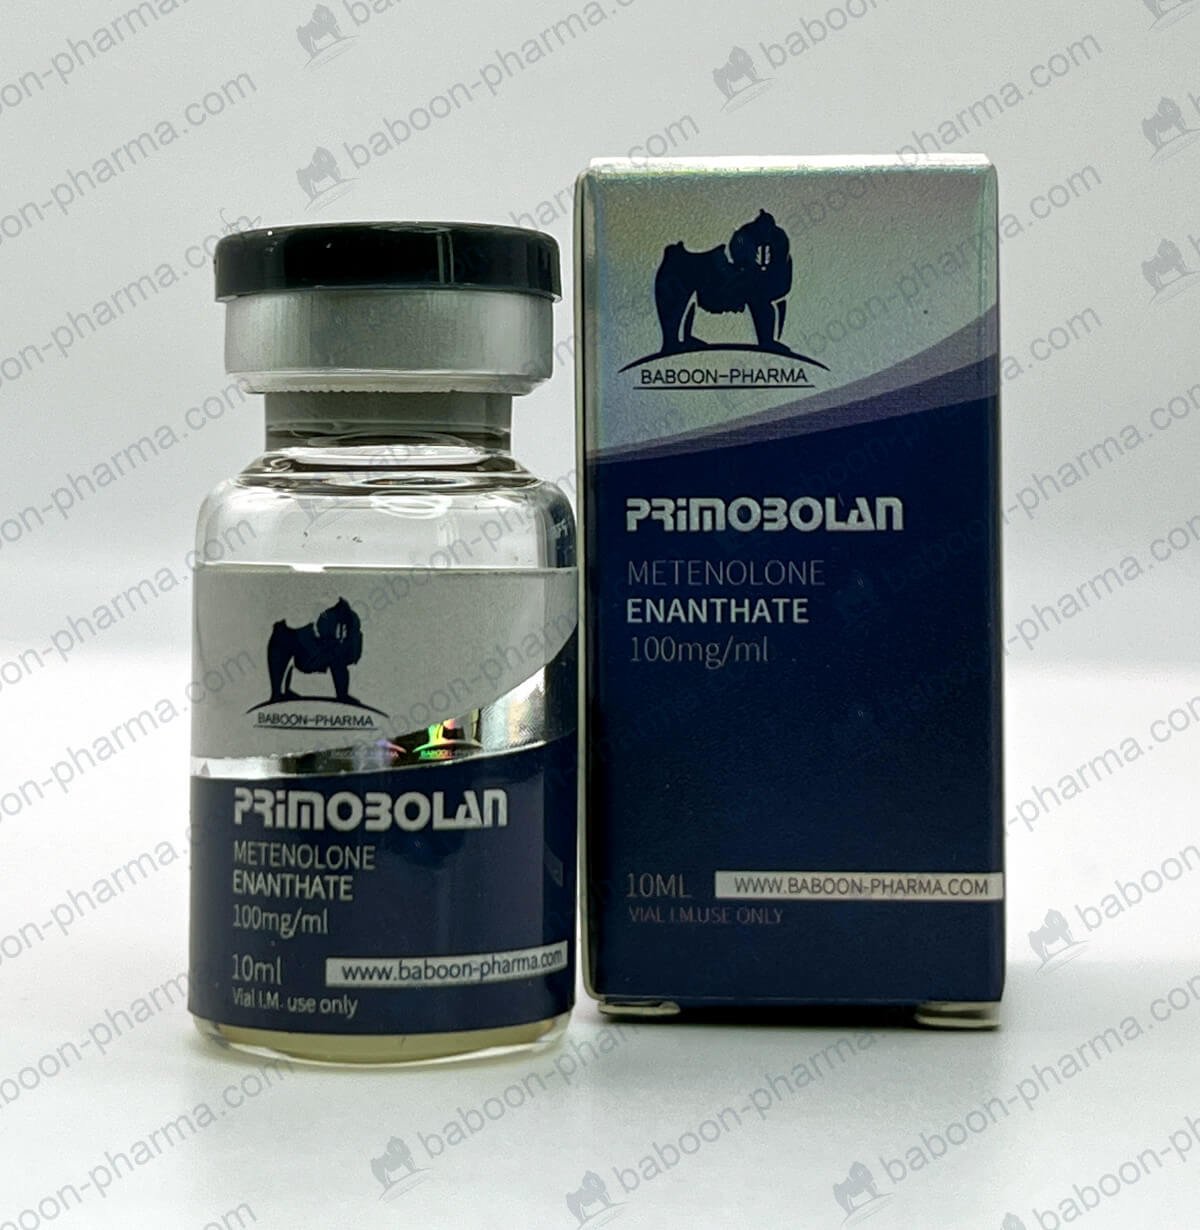 Pavián-Pharma-Oil_Primobolan_1